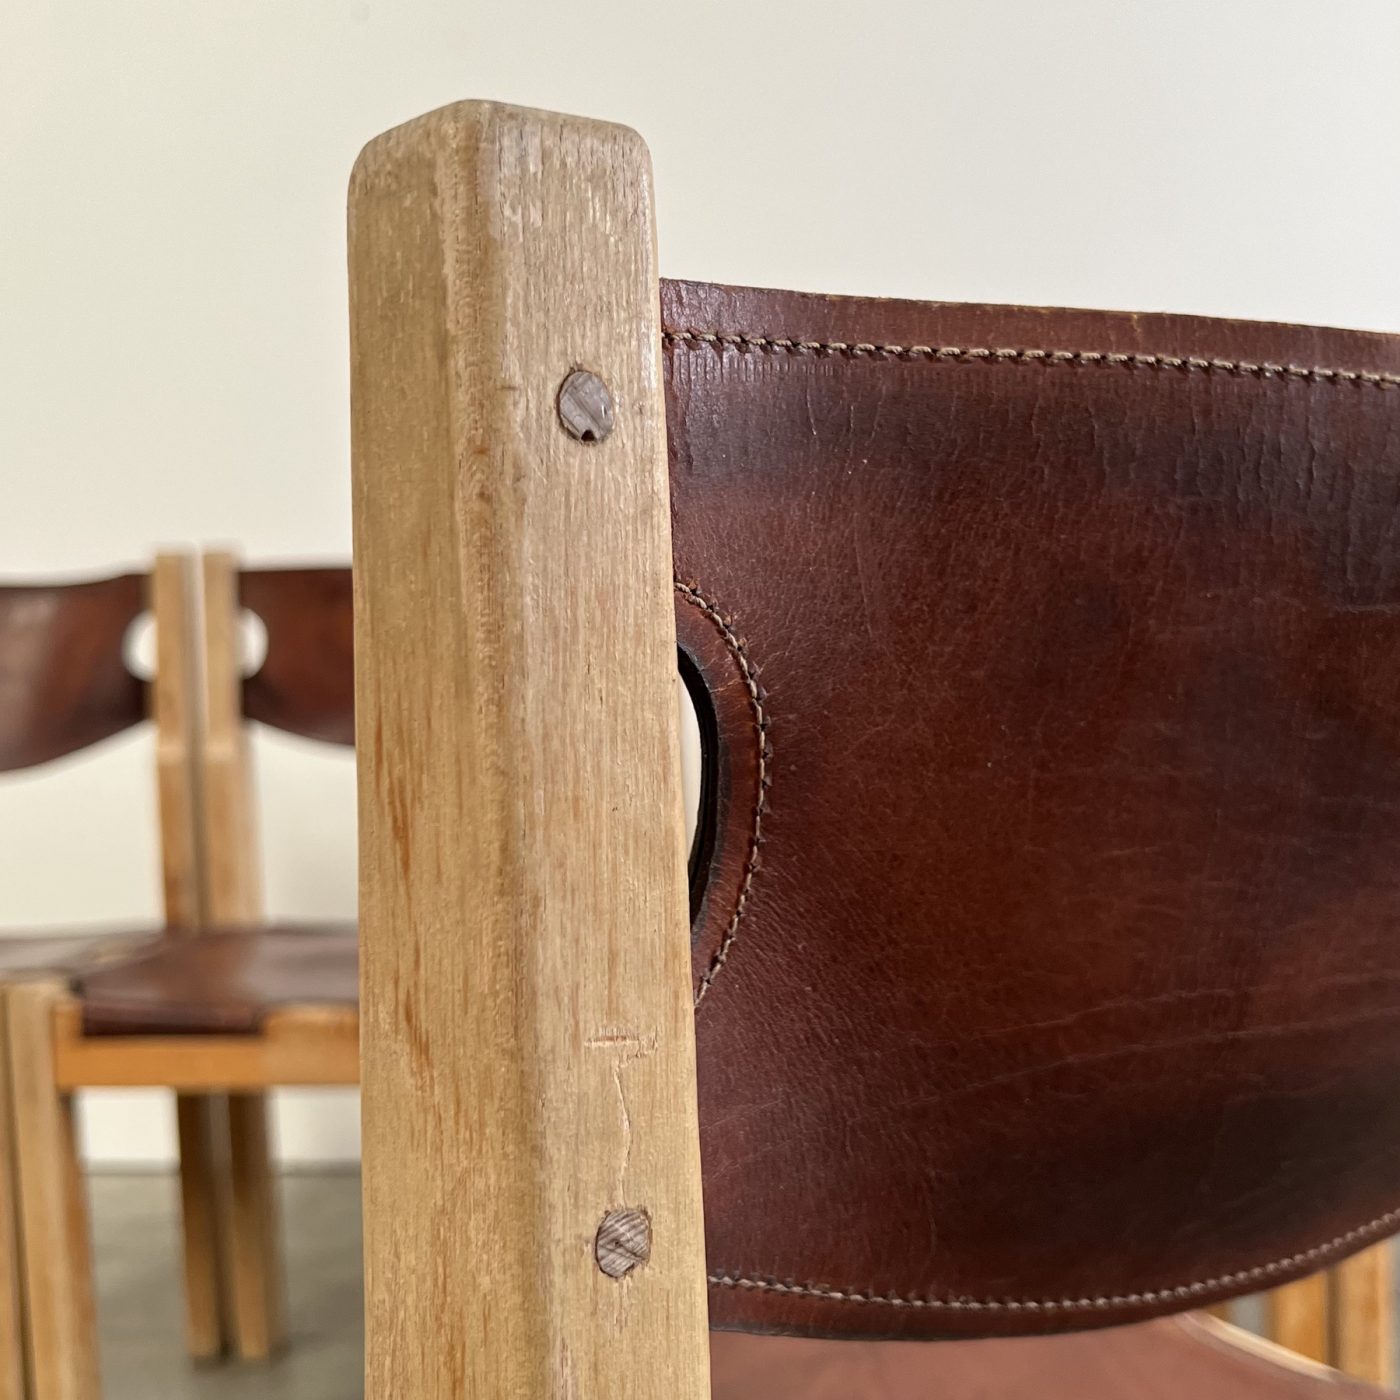 objet-vagabond-leather-chairs0001